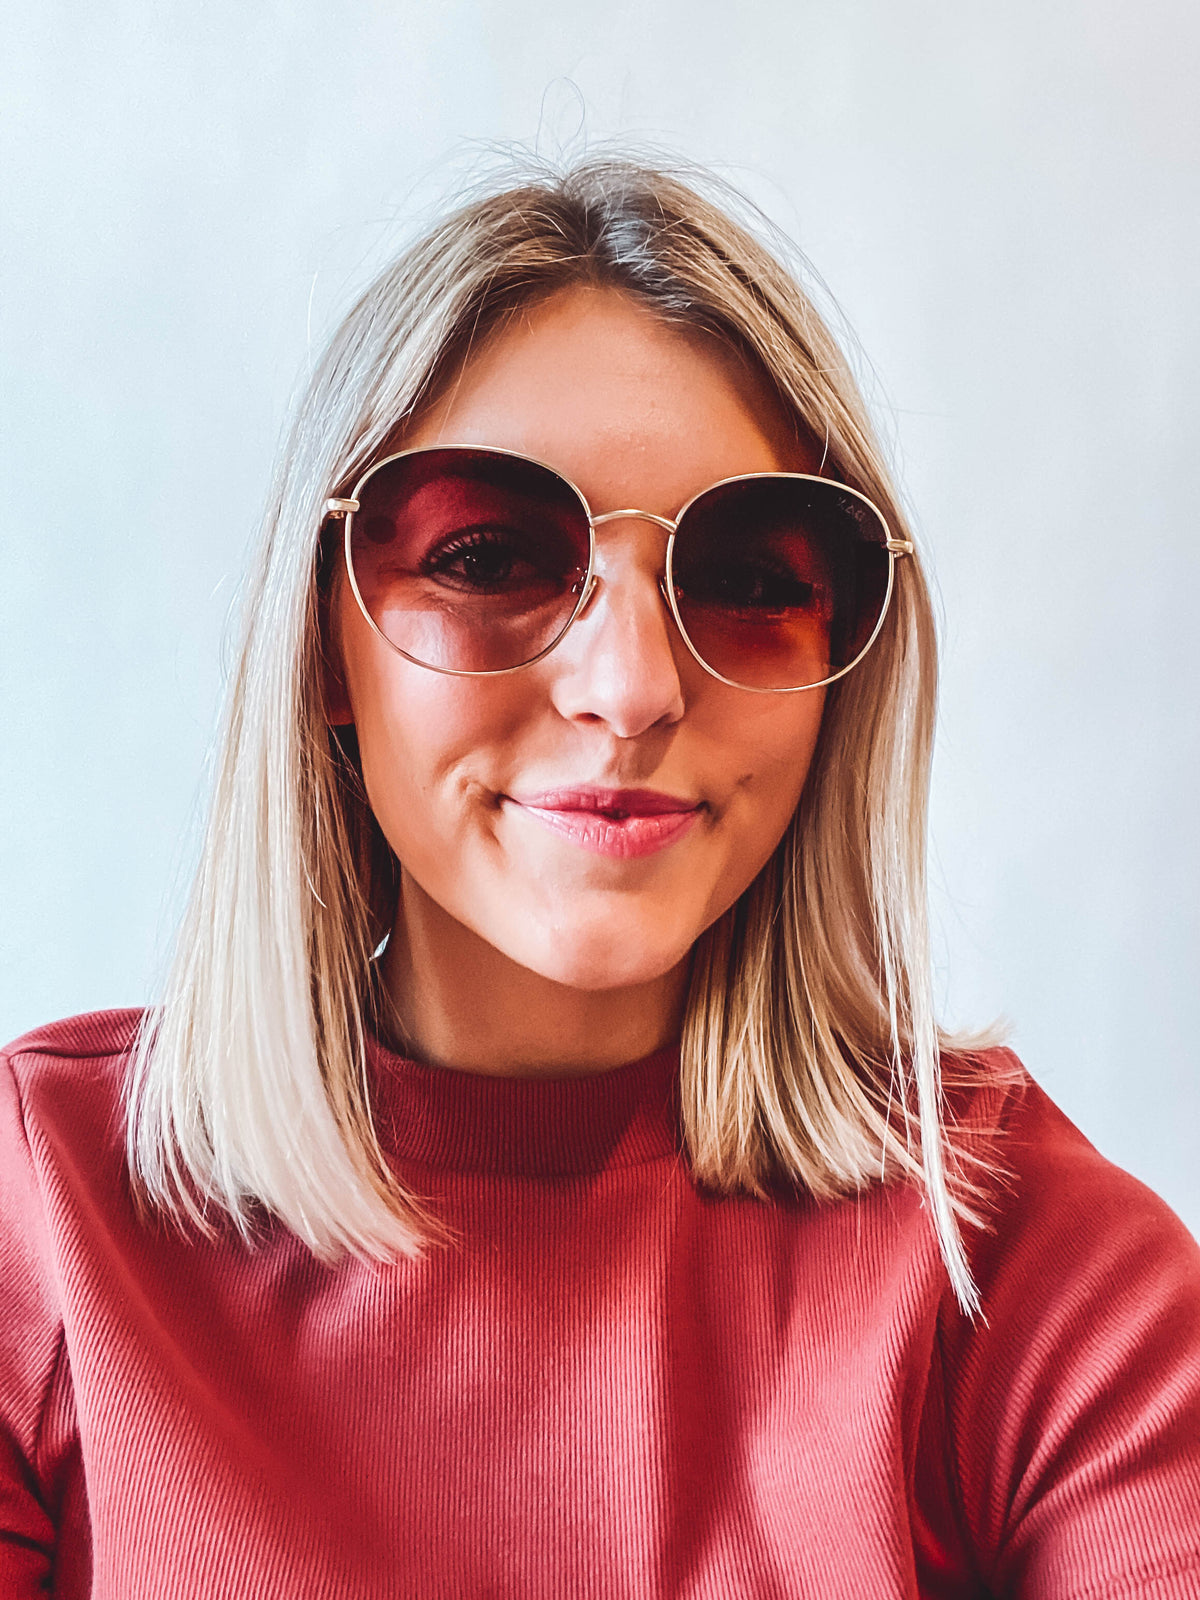 Georgie Sunglasses-Brown-DAX Eyewear